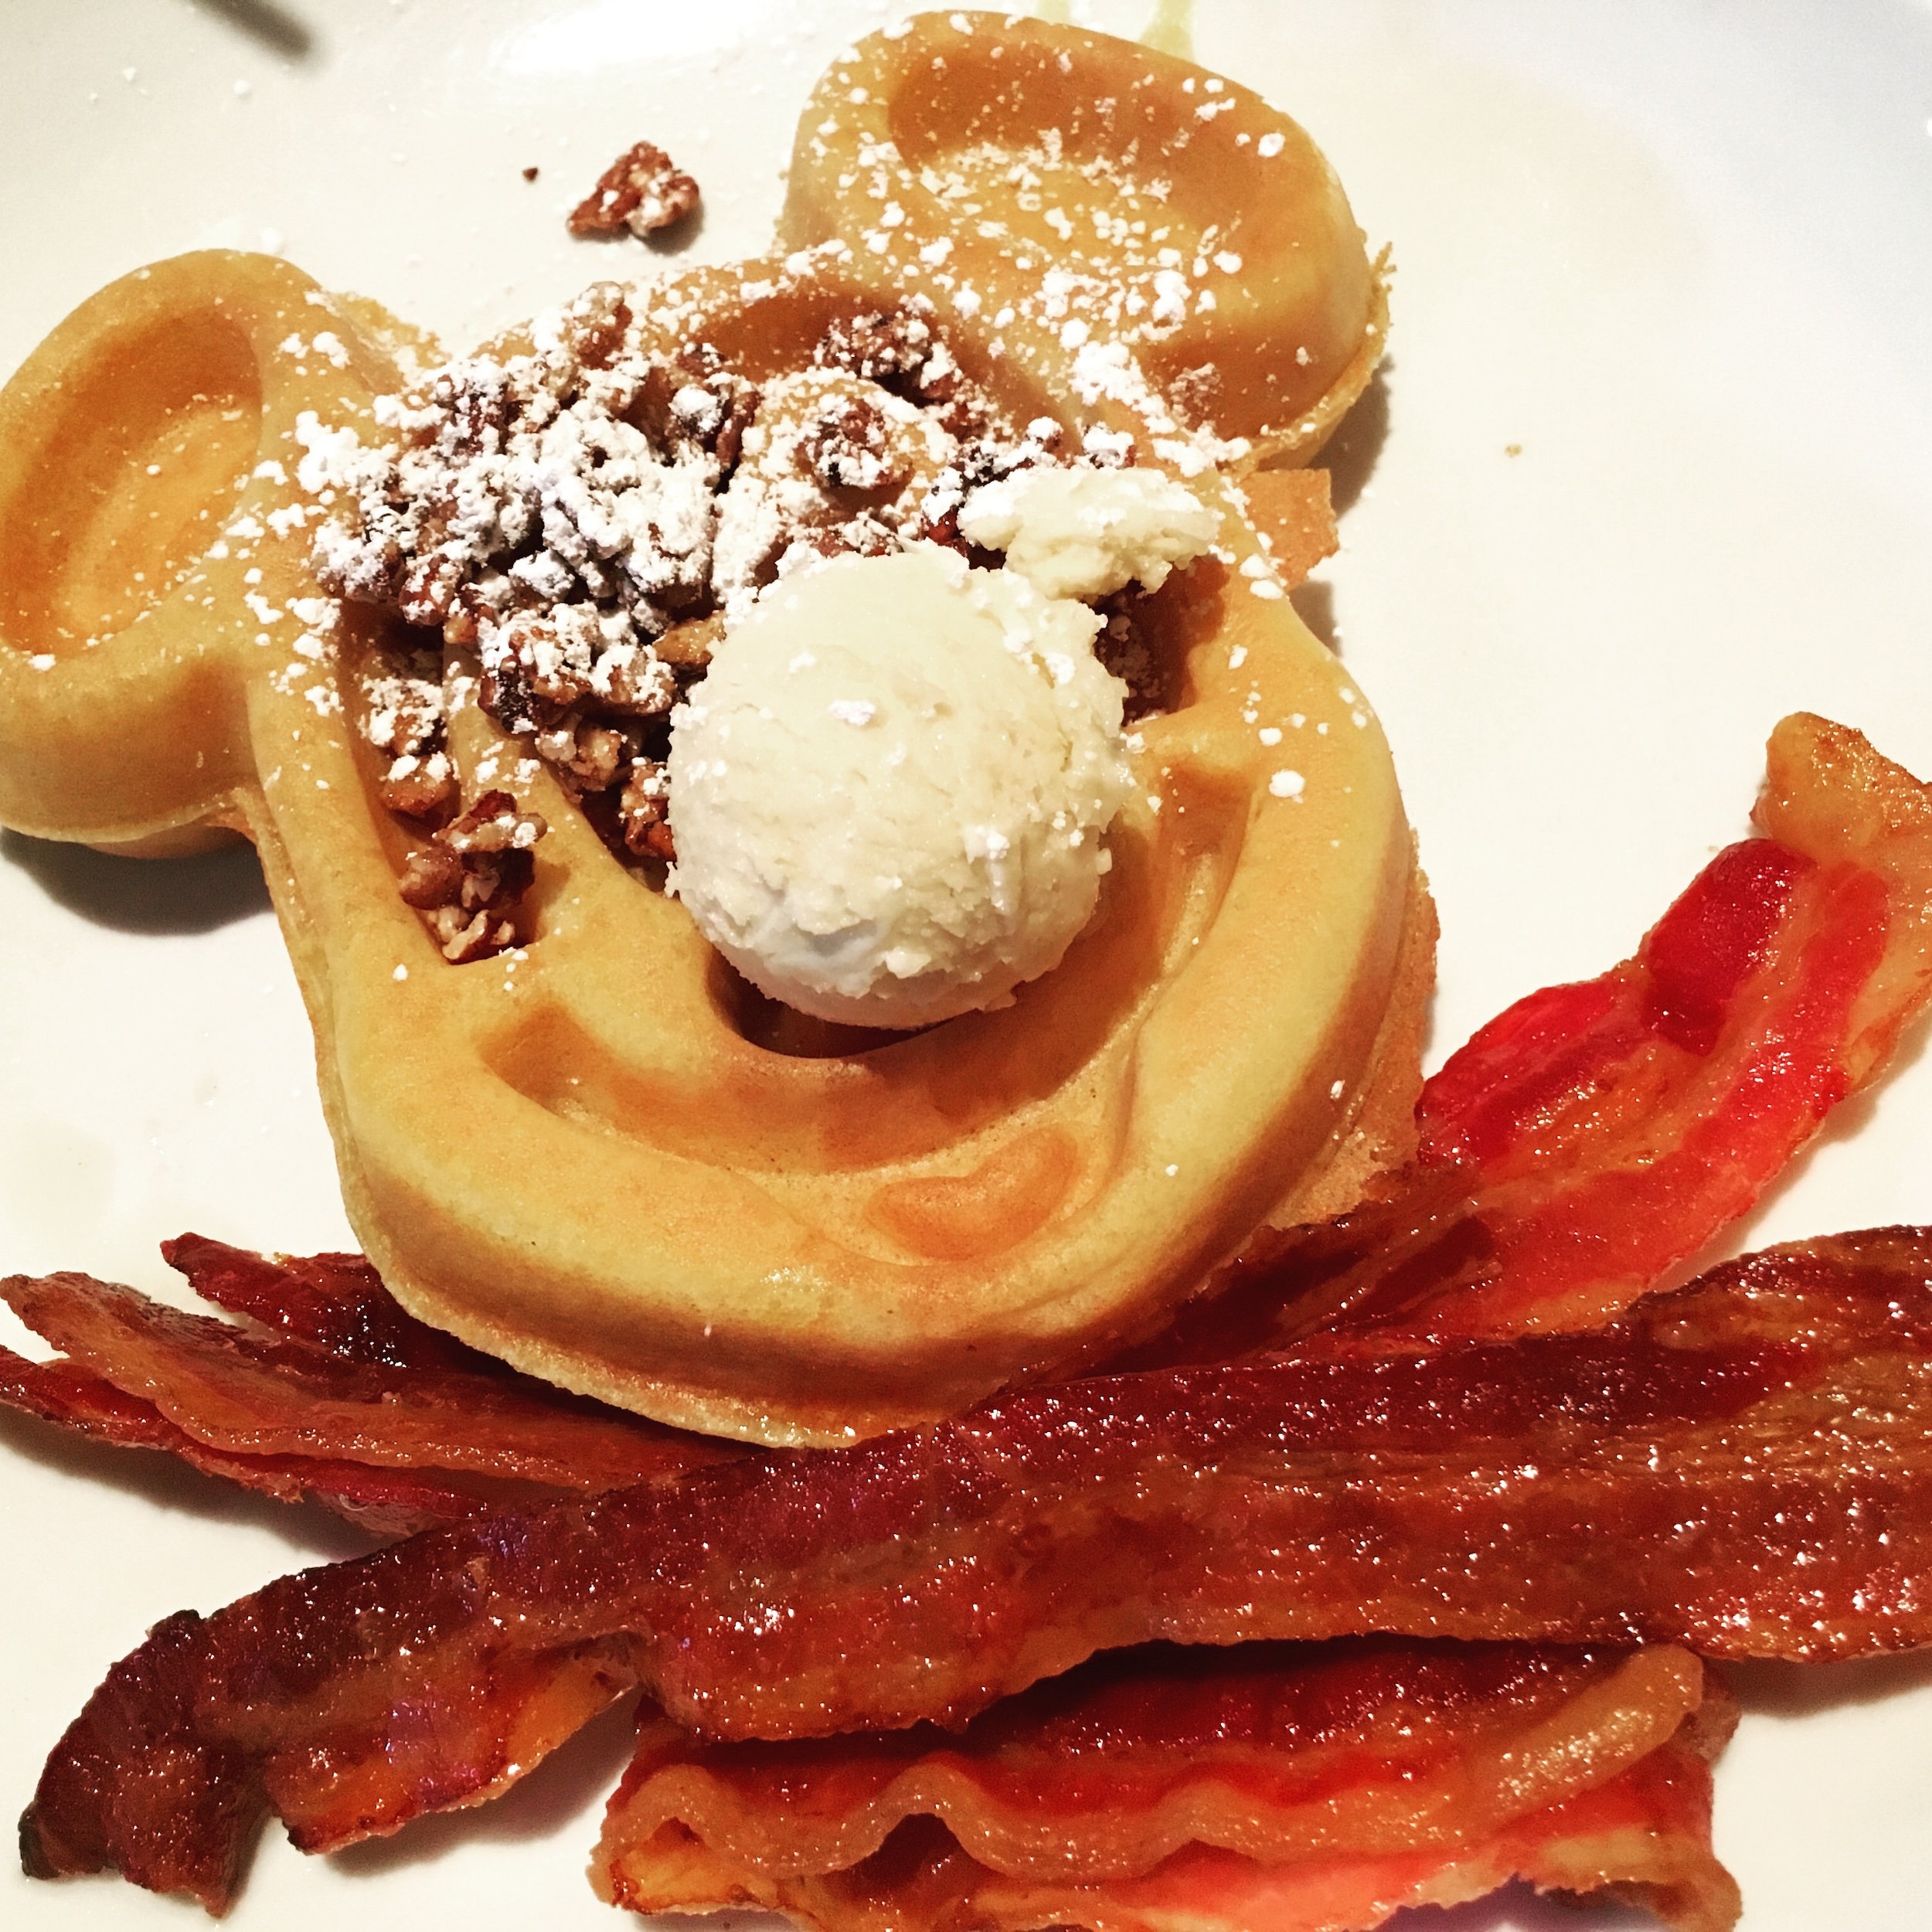 Whispering Canyon Cafe - Mickey waffle